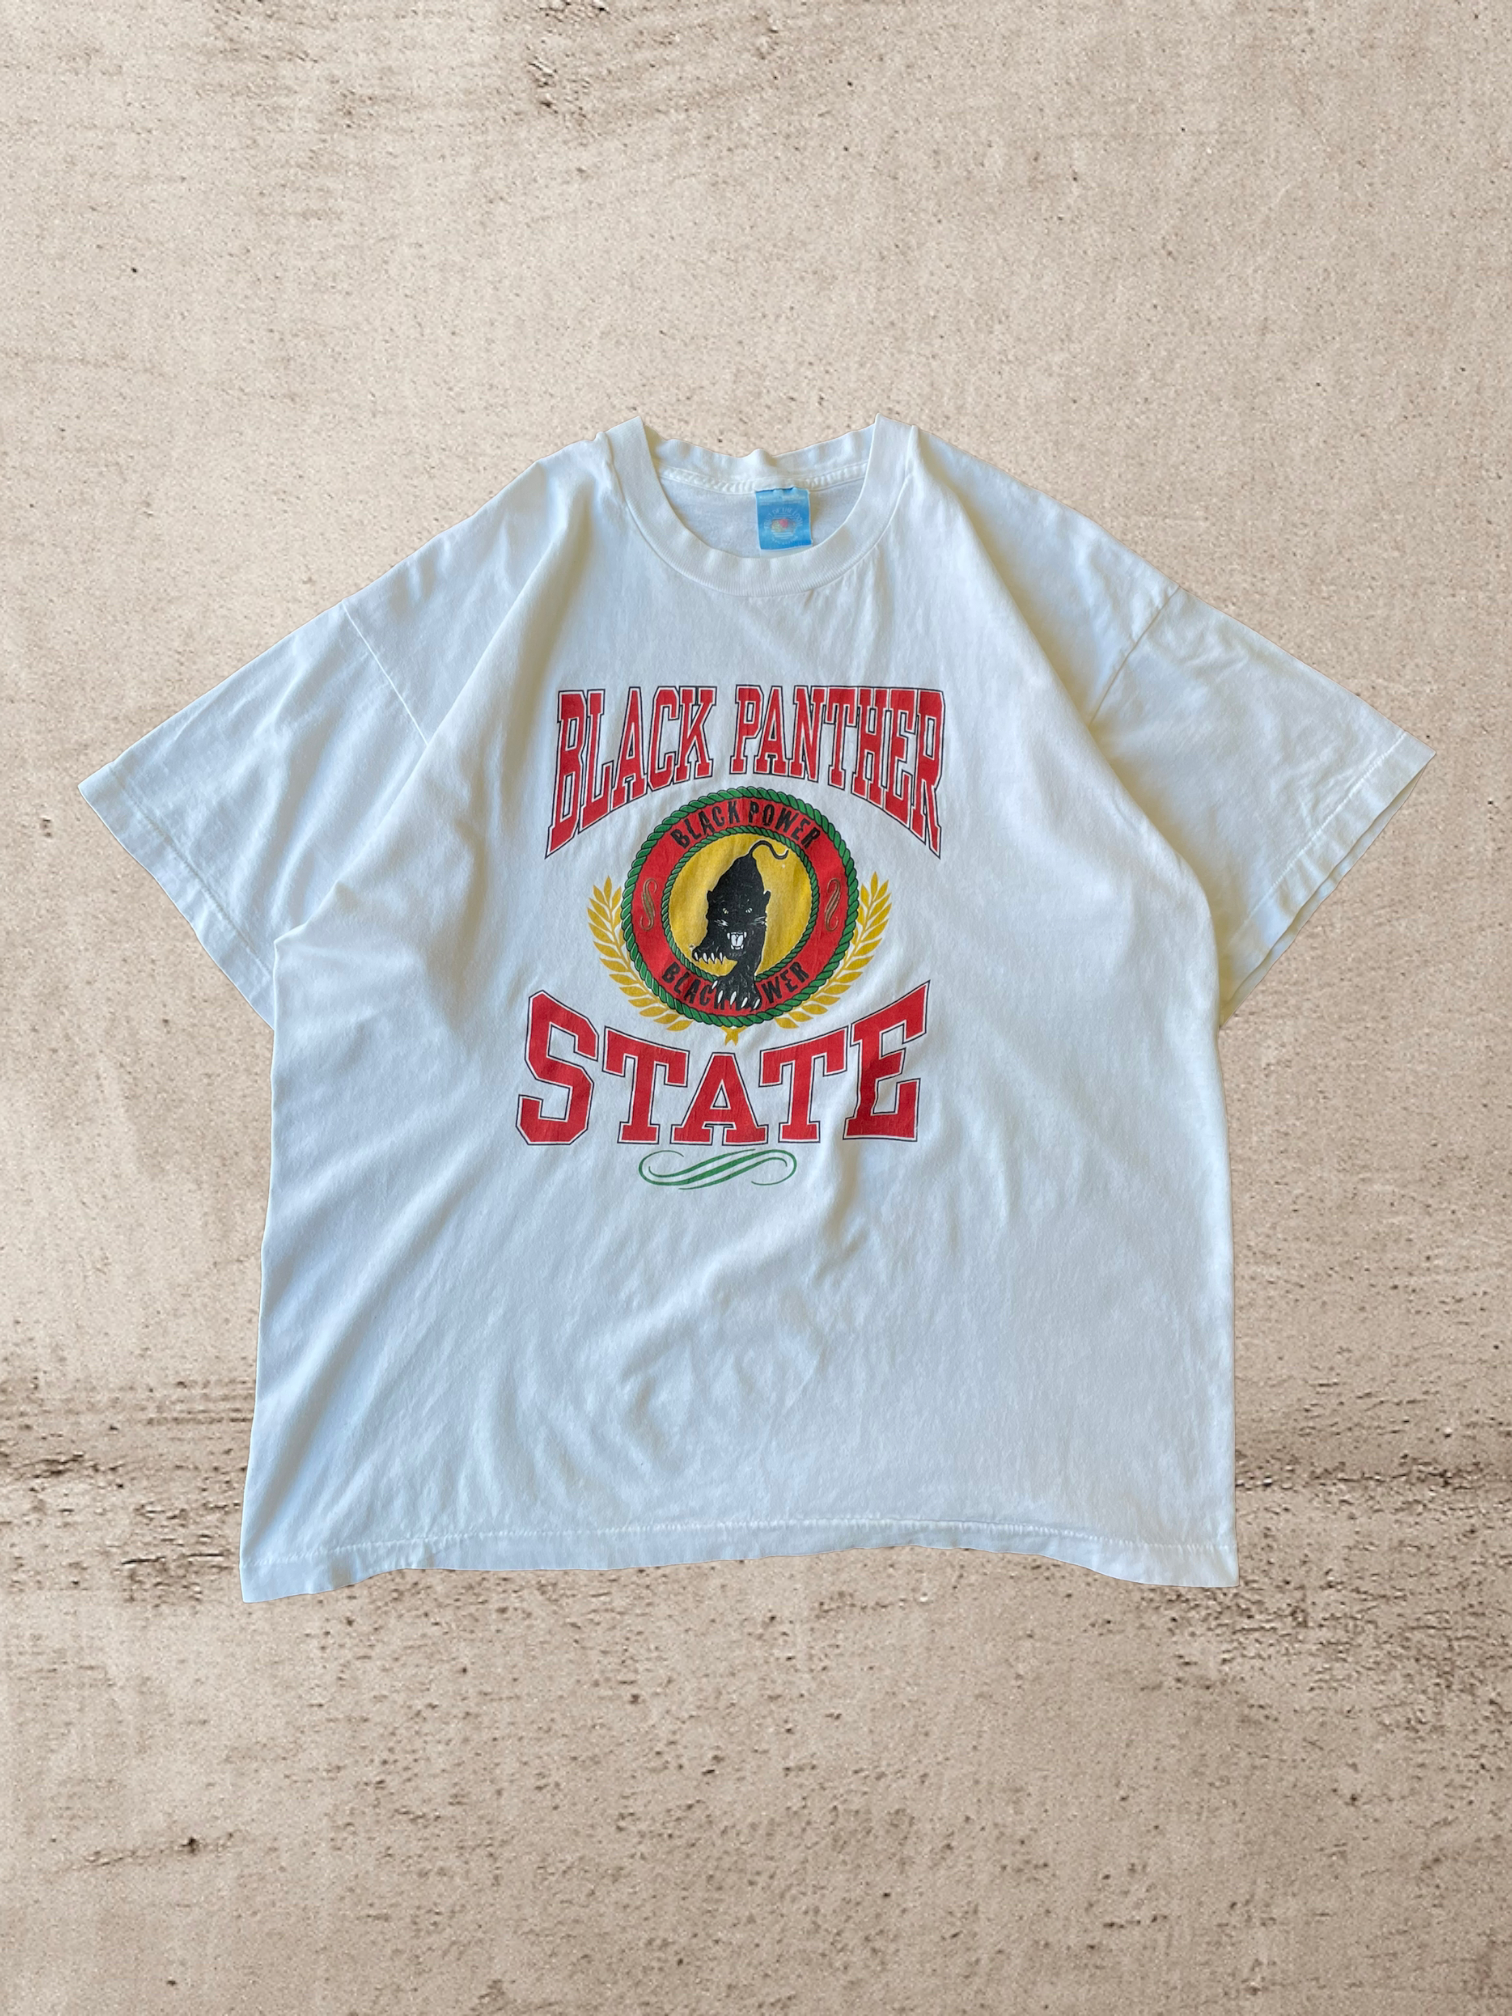 90s Black Panther State T-Shirt - XL